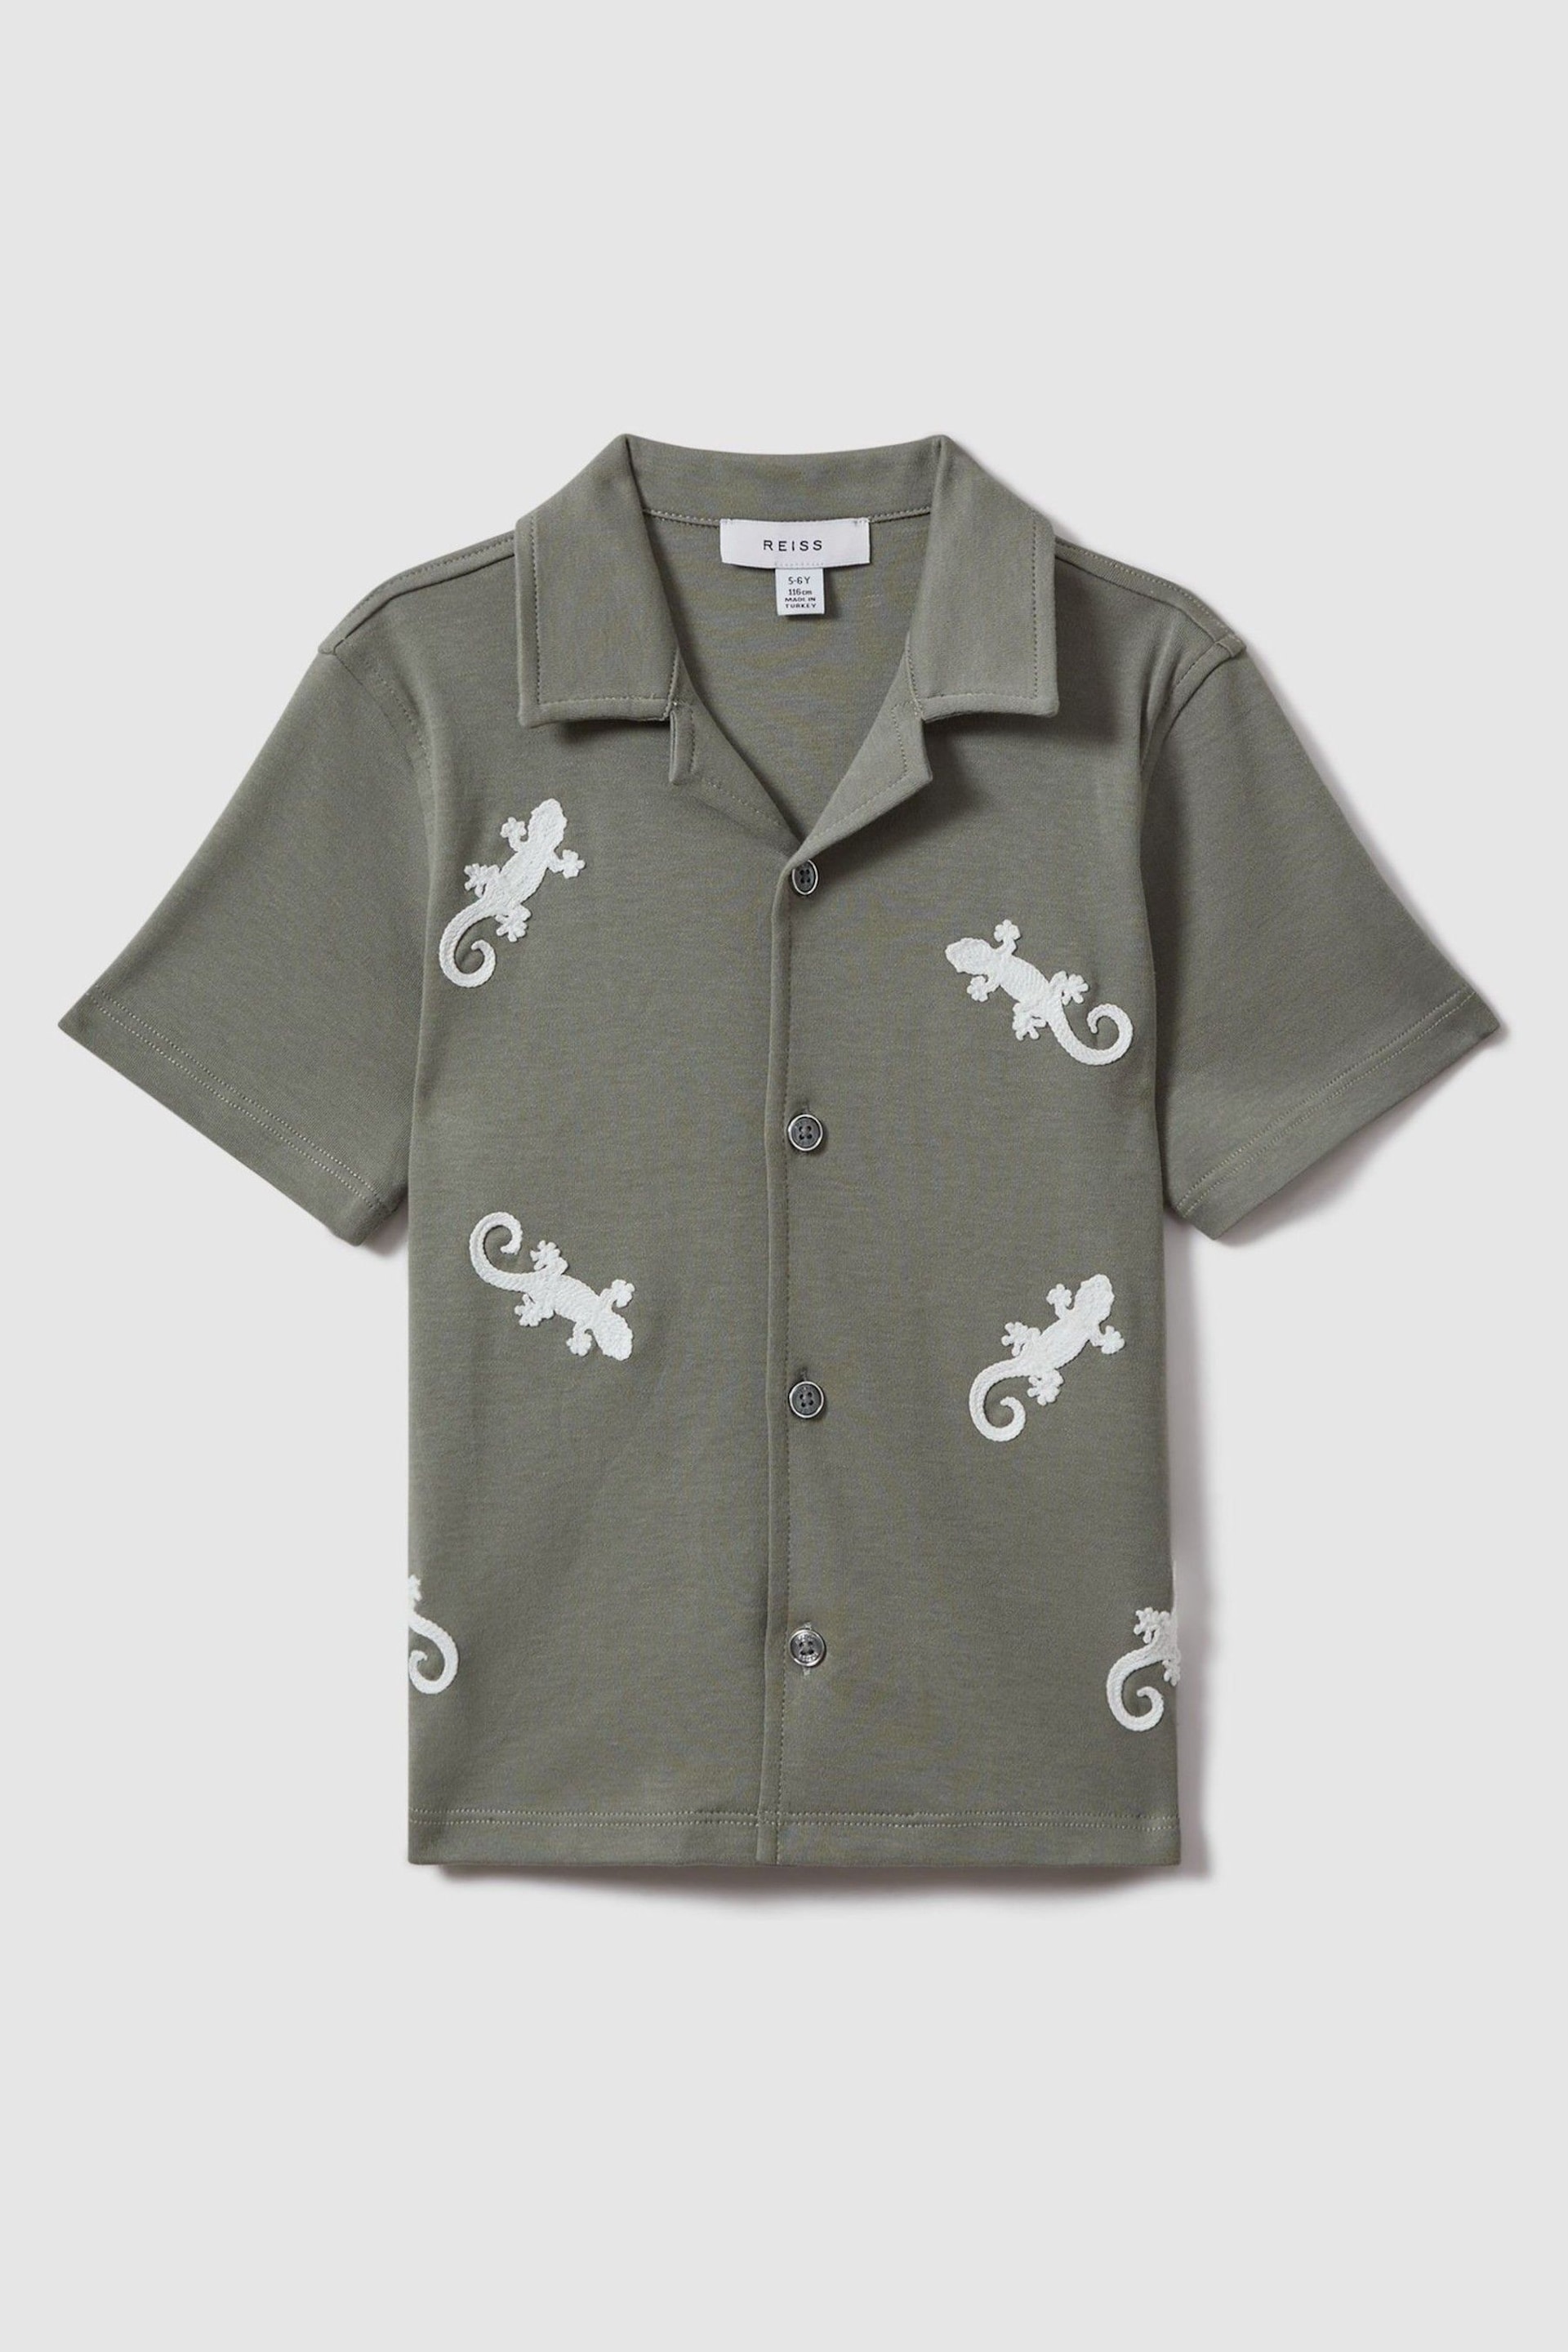 Reiss Sage/White Thar Teen Cotton Reptile Patch Cuban Collar Shirt - Image 1 of 4